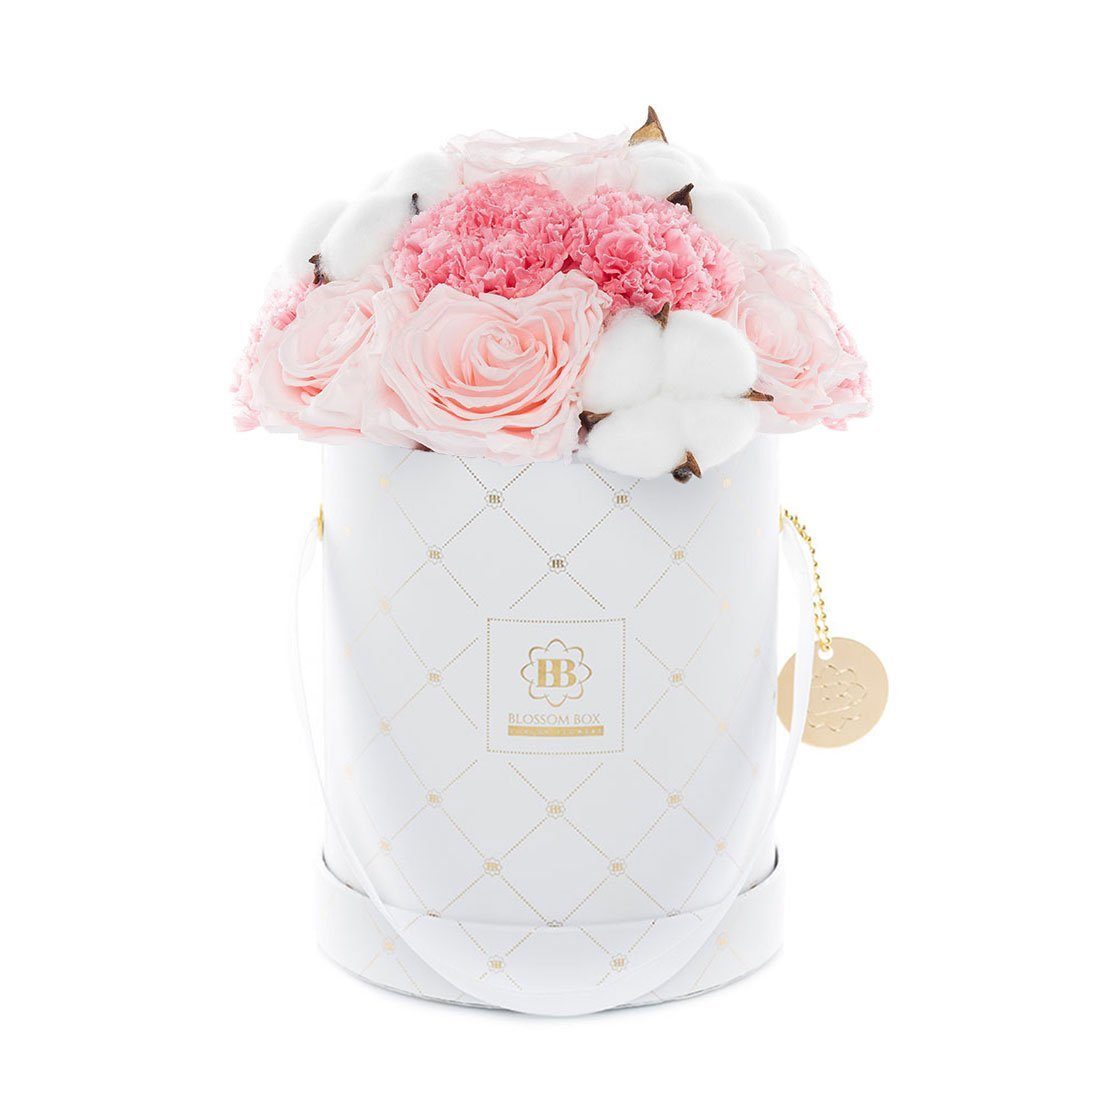 Trockenblume White Box - Premium Blossom MARYLEA - - Medium Cotton Candy,